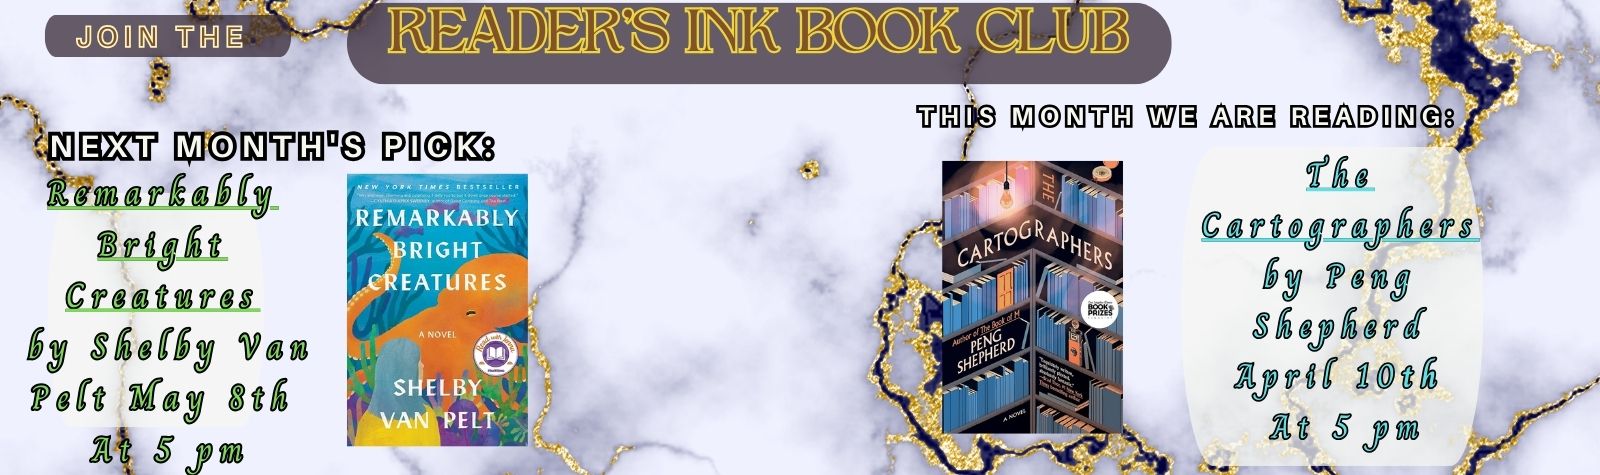 Reader’s Ink Book Club